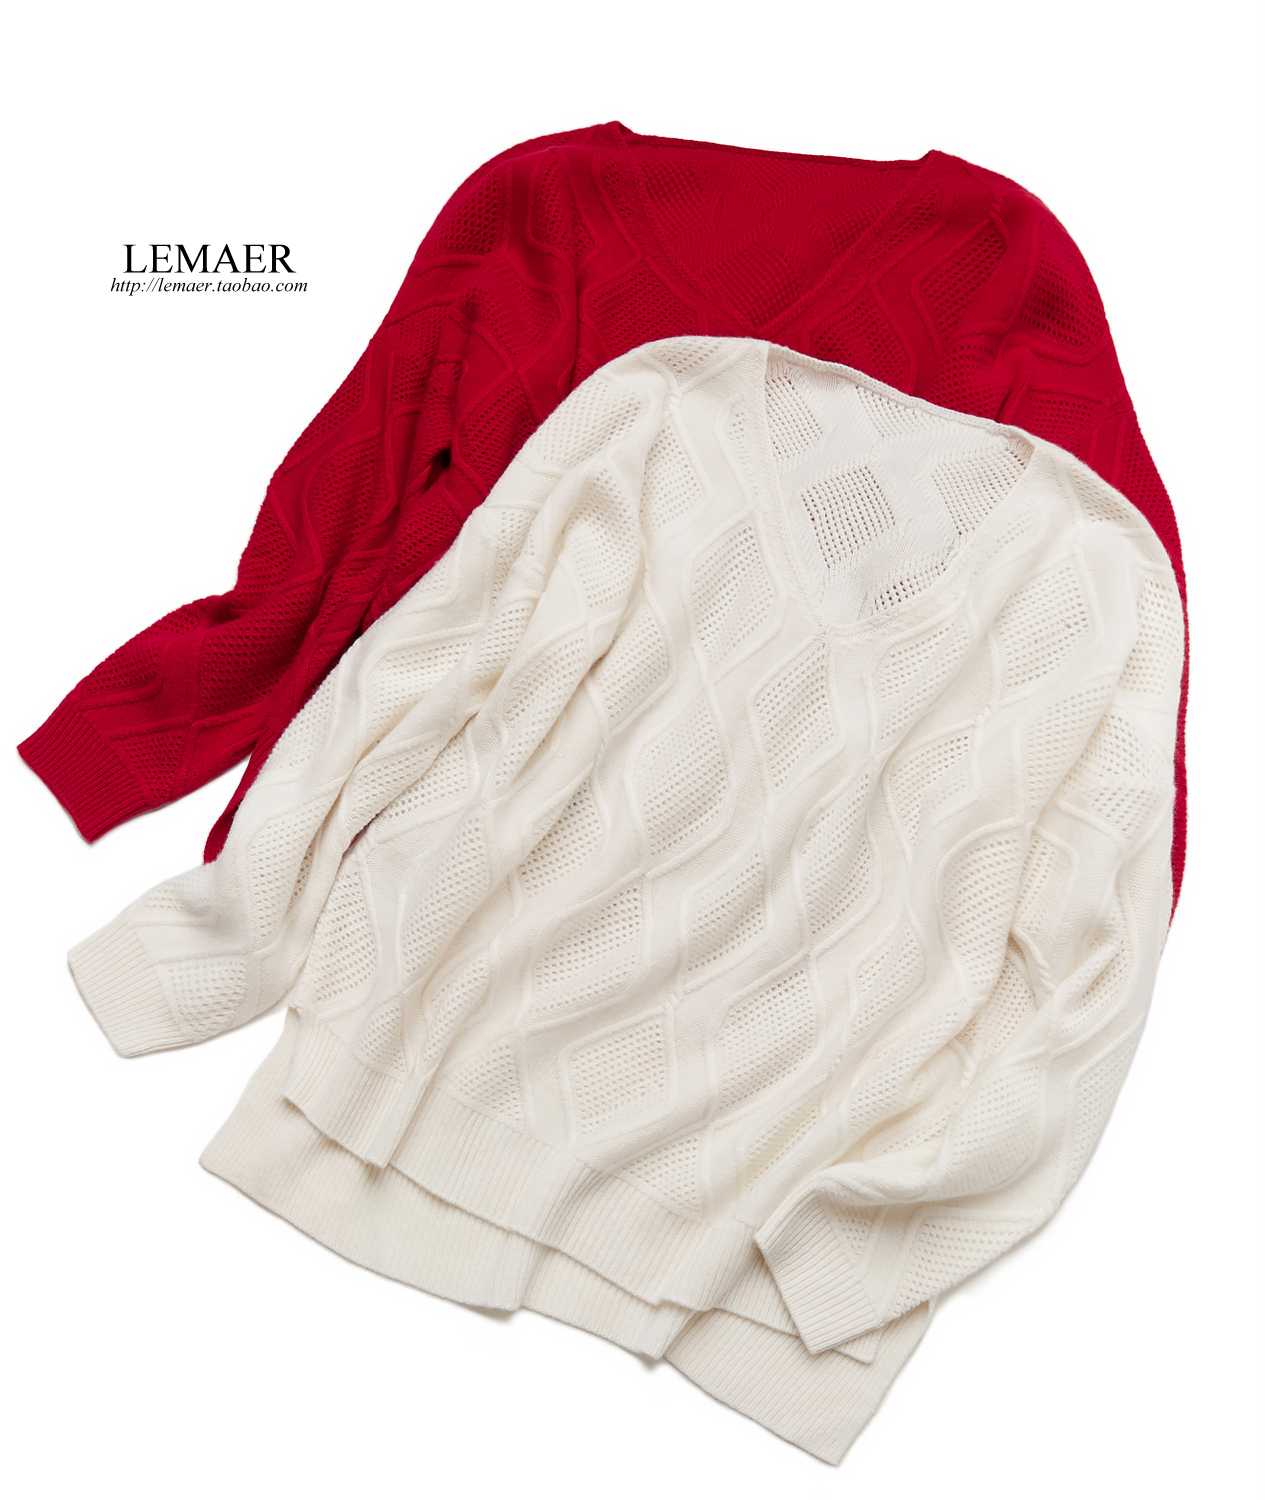 LEMAER超值分享 英国客户CASHMERE前短后长镂空网眼设计羊绒套衫